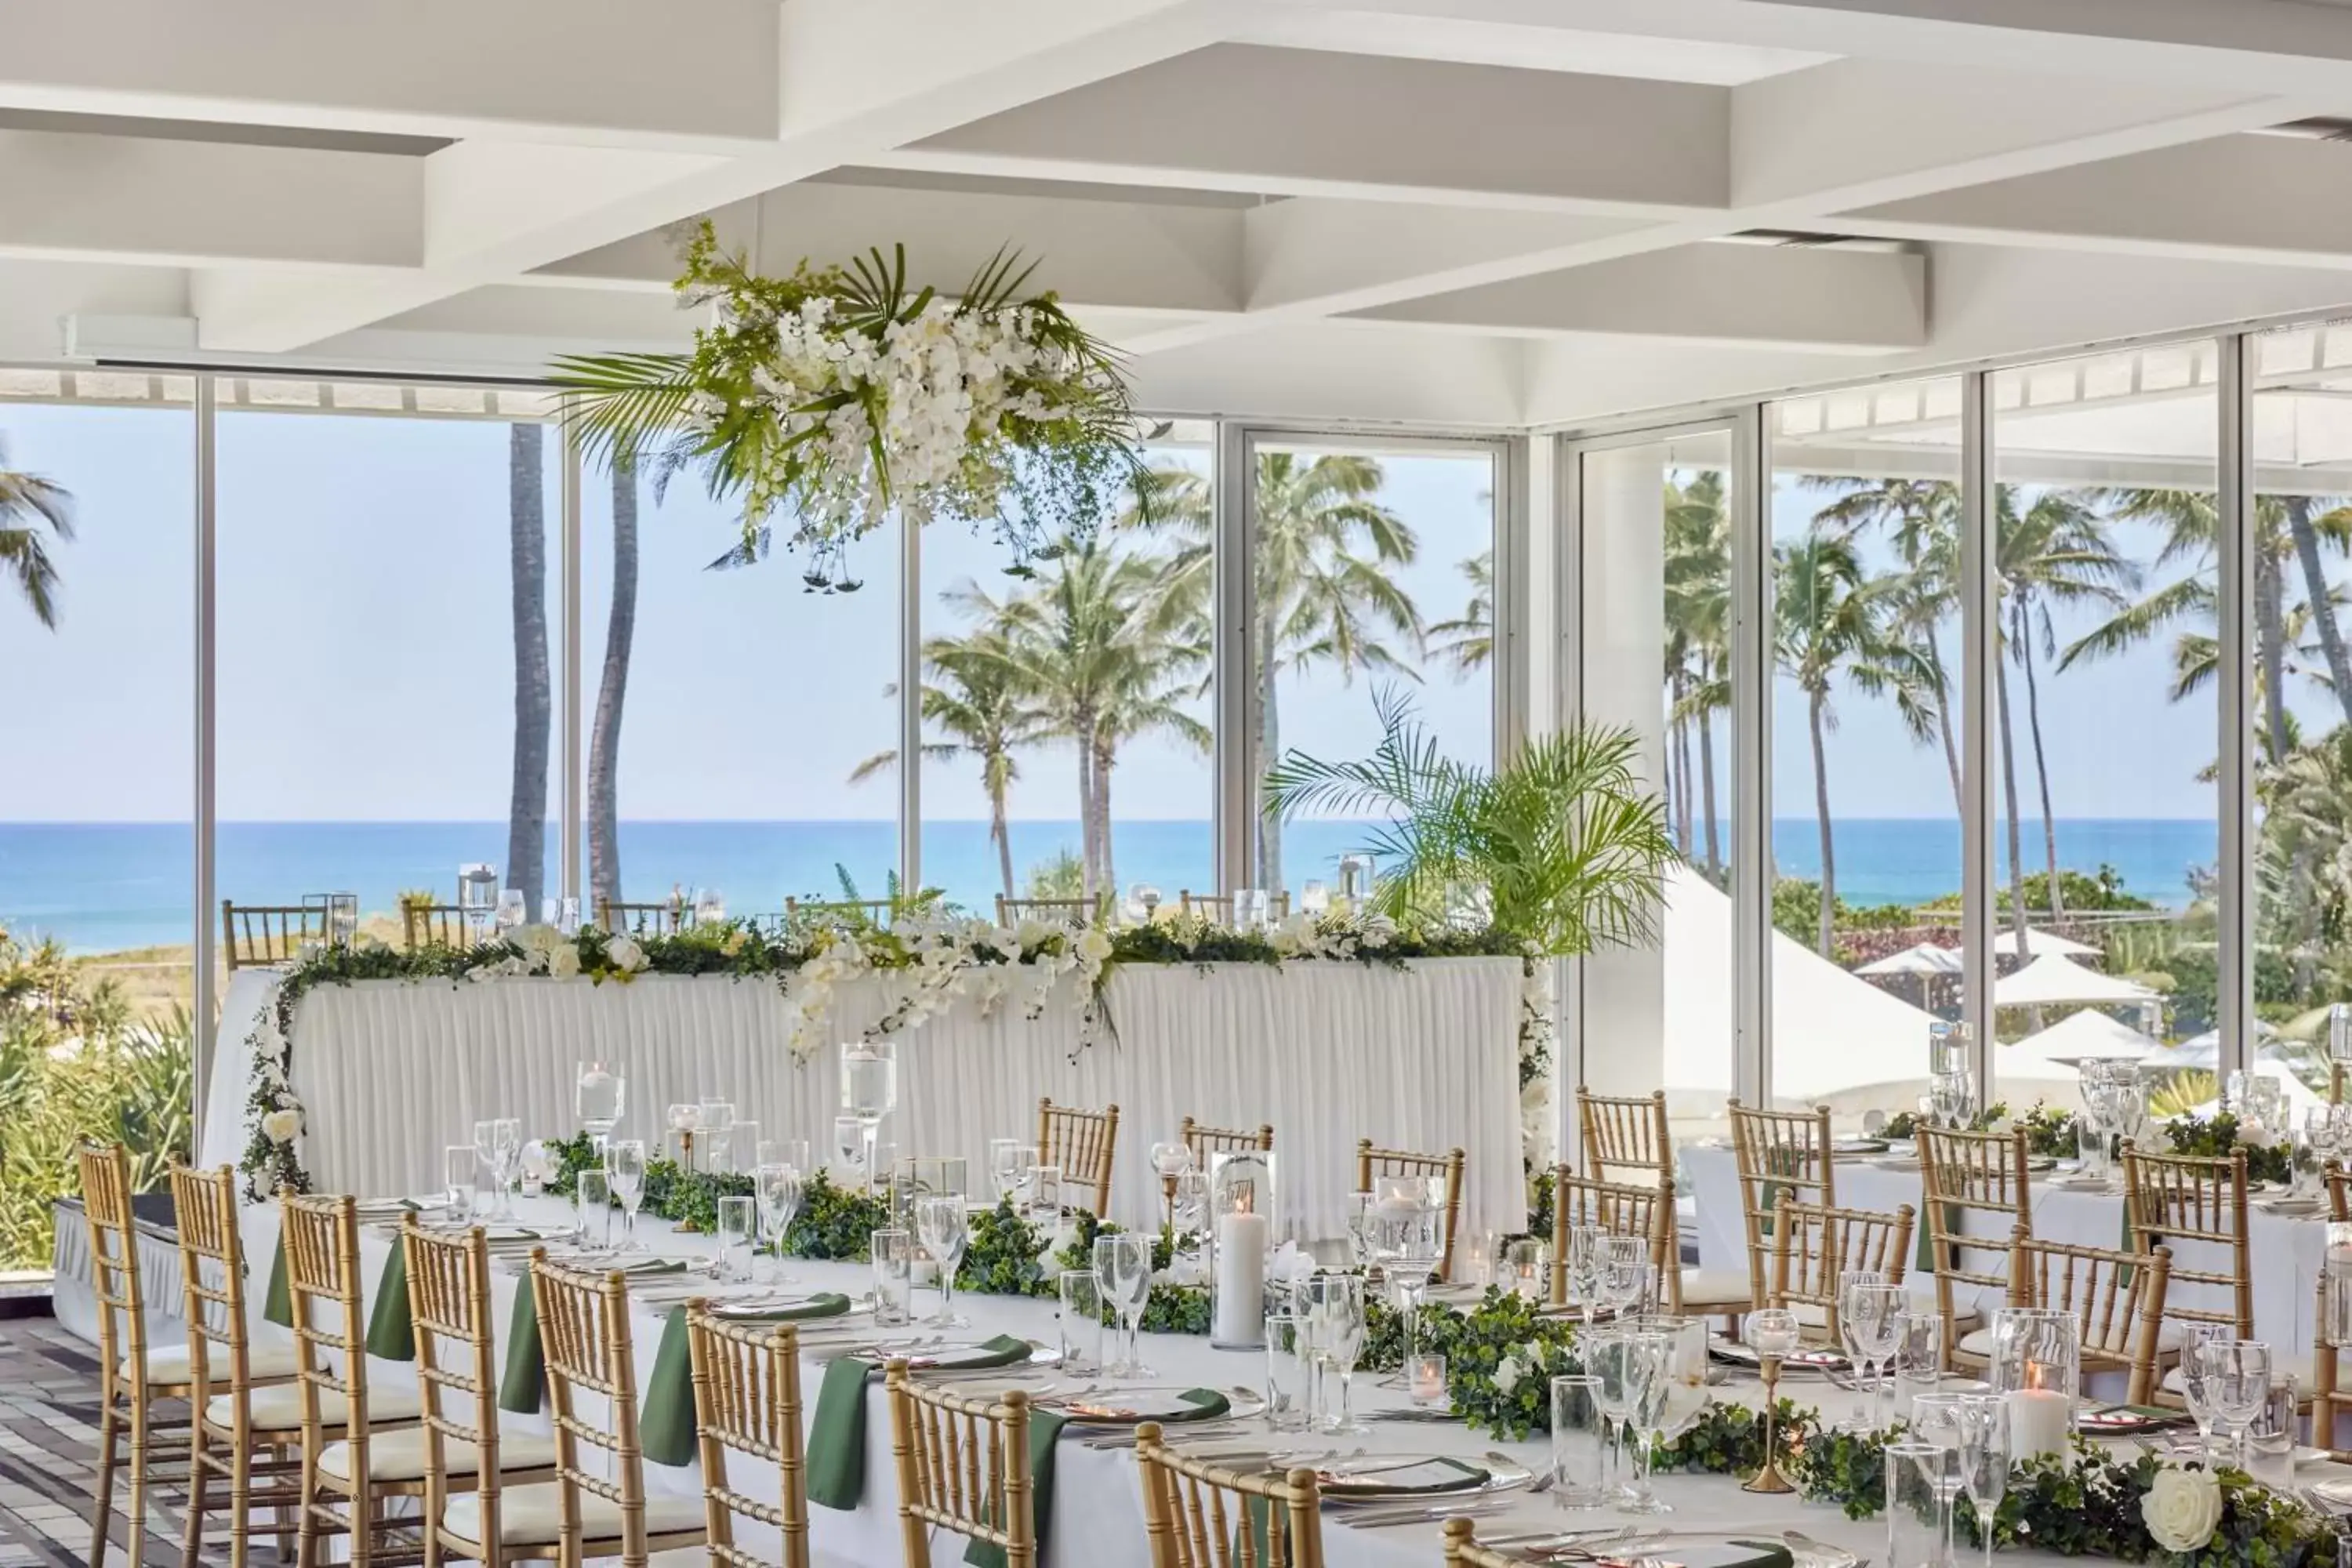 Banquet/Function facilities, Banquet Facilities in Sheraton Grand Mirage Resort Gold Coast